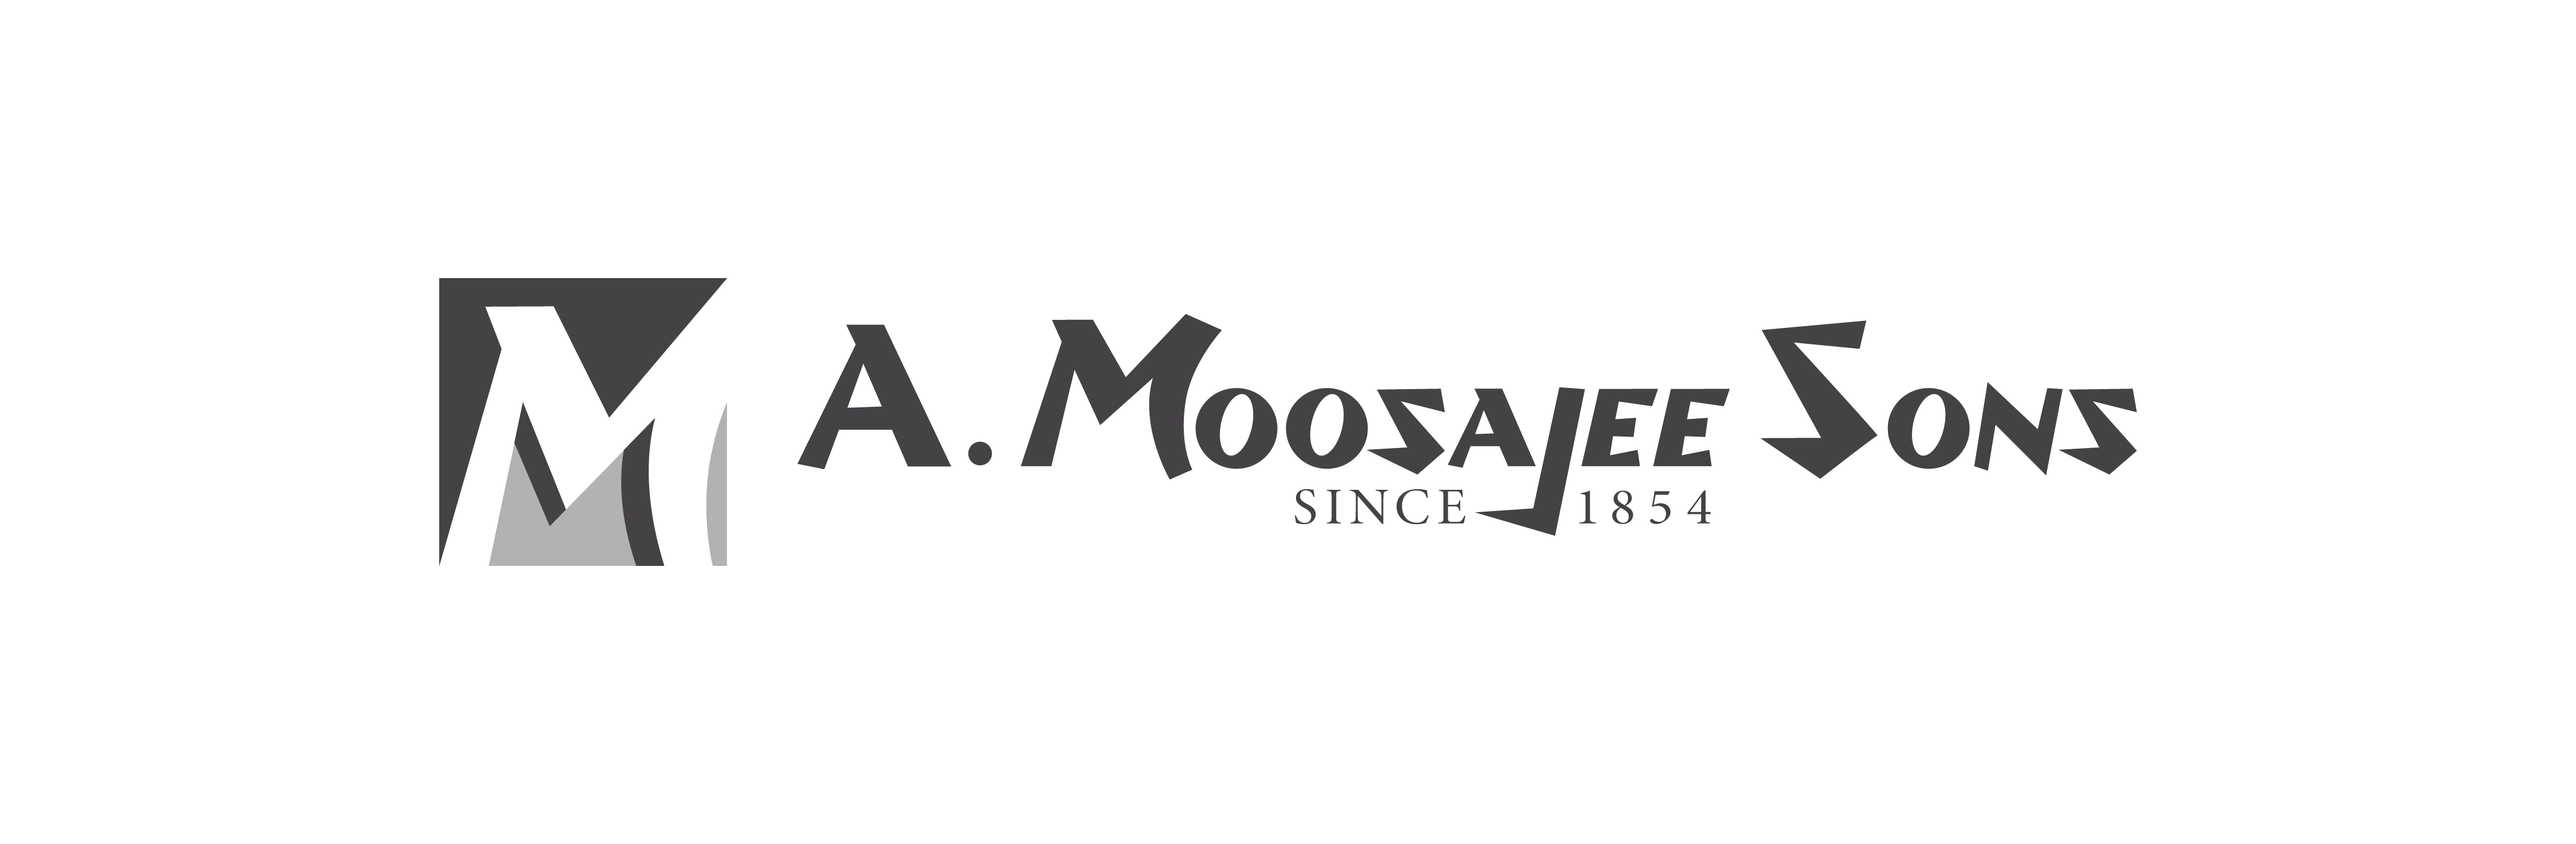 A.Moosajee Sons